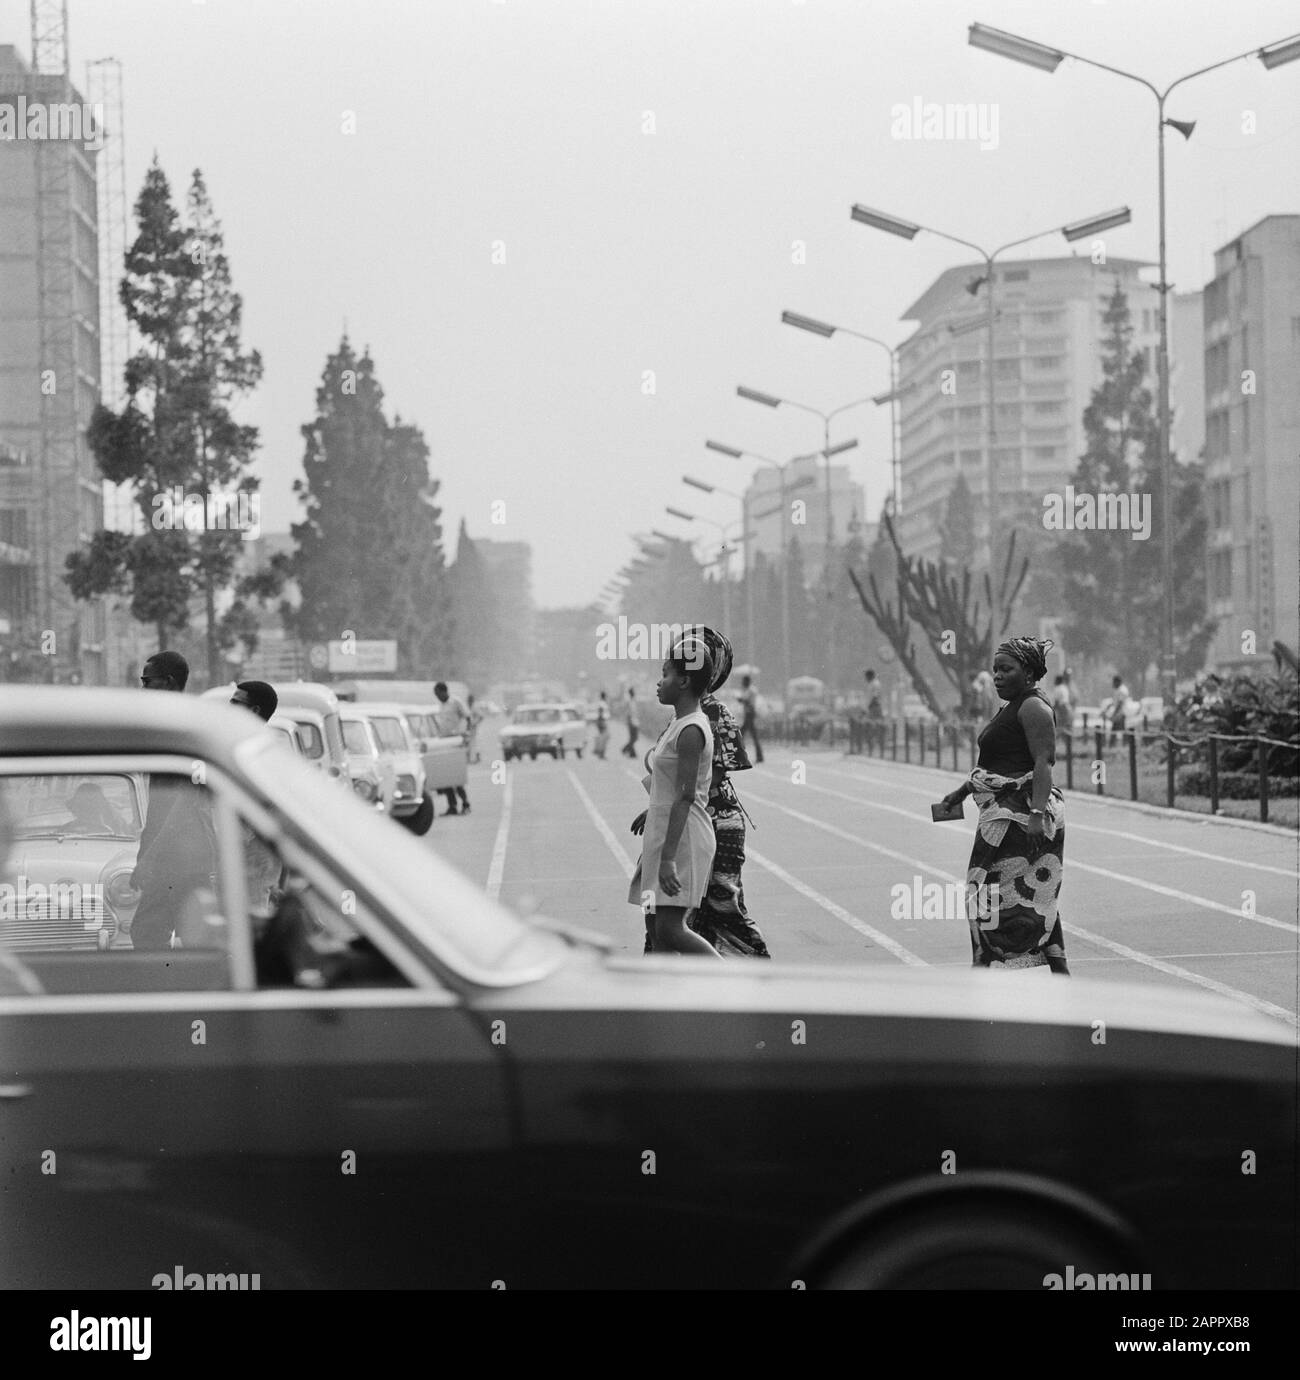 Zaire (ehemals Belgischer Kongo) Streetscape in Kinshasa Datum: 24. Oktober 1973 Ort: Kongo, Kinshasa, Zaire Schlüsselwörter: Stadtansichten Stockfoto